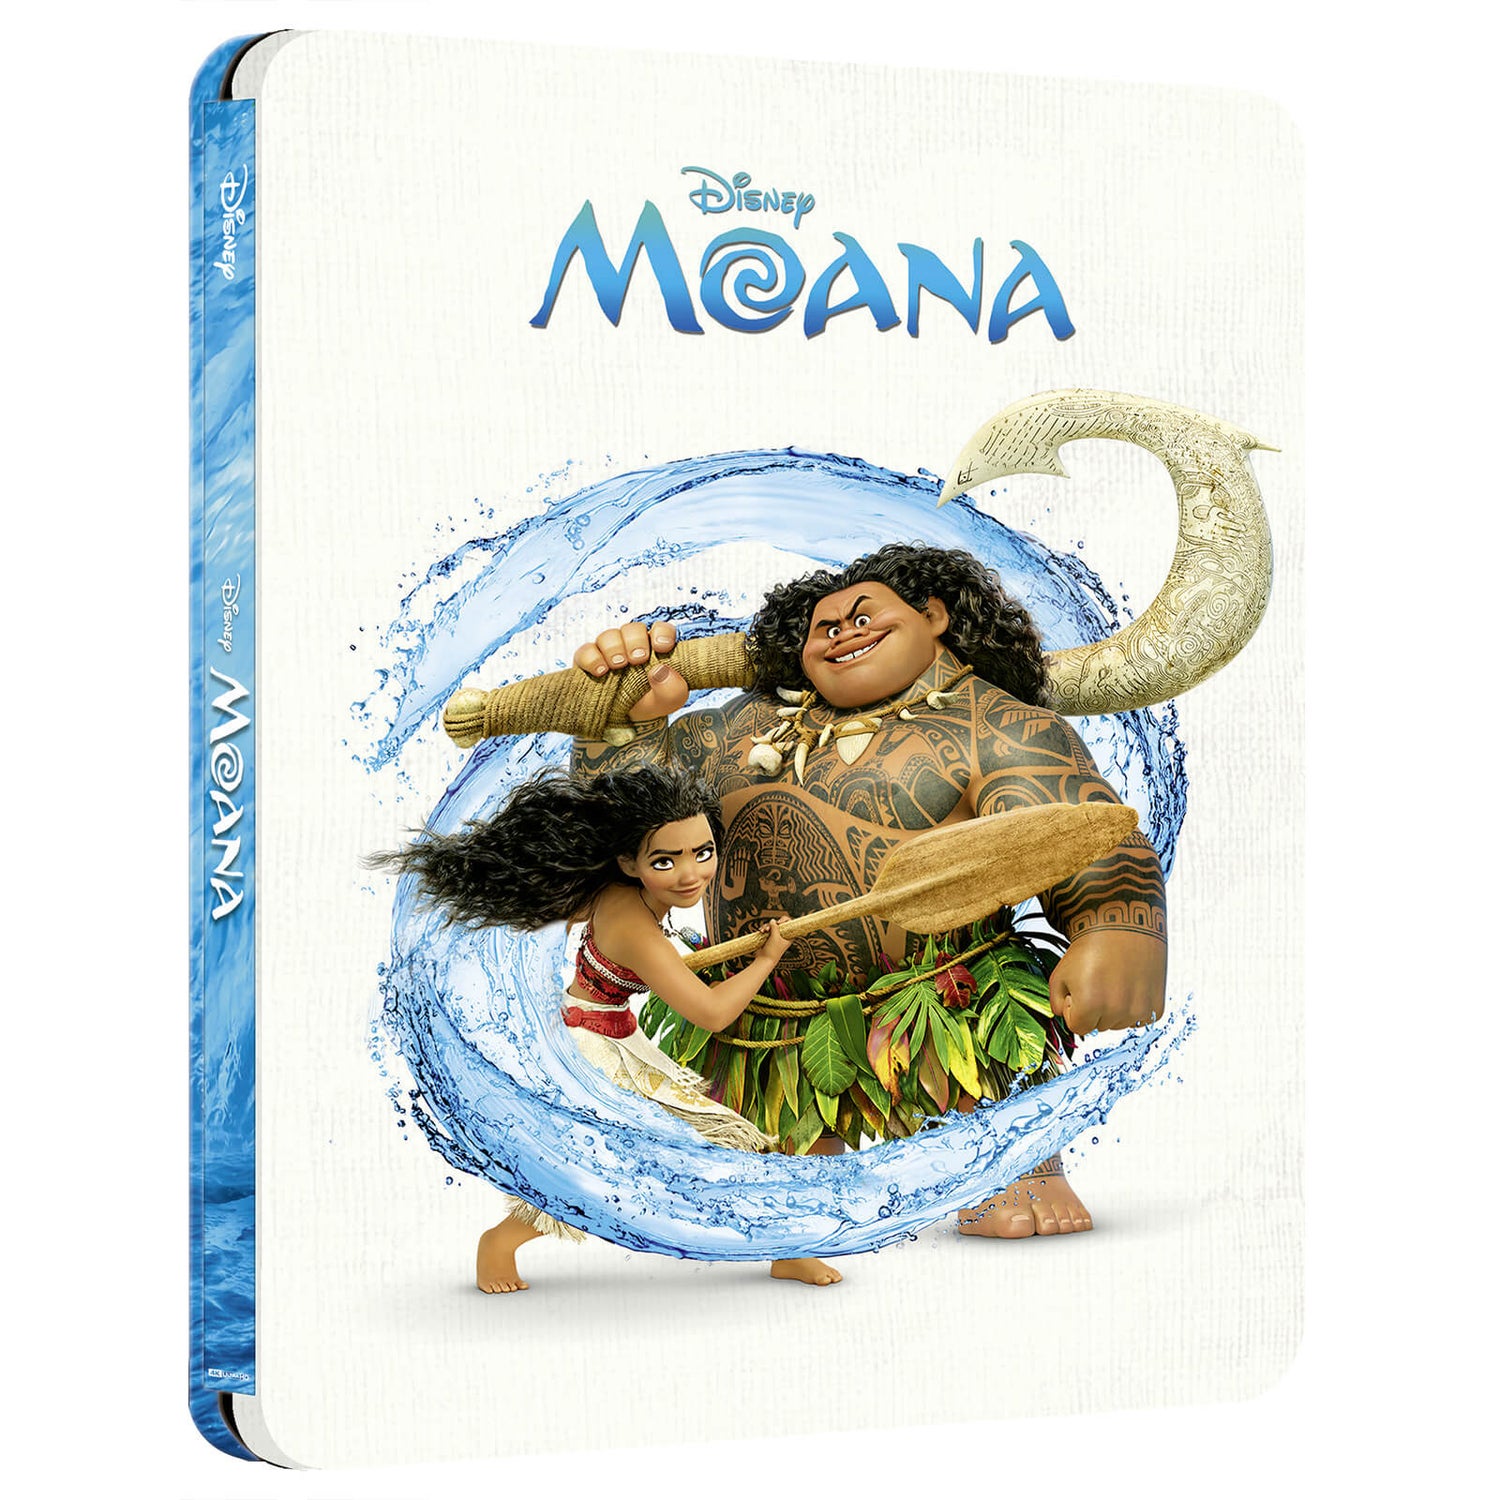 Disney's Moana - Zavvi Exclusive 4K Ultra HD Steelbook (Includes Blu-ray)